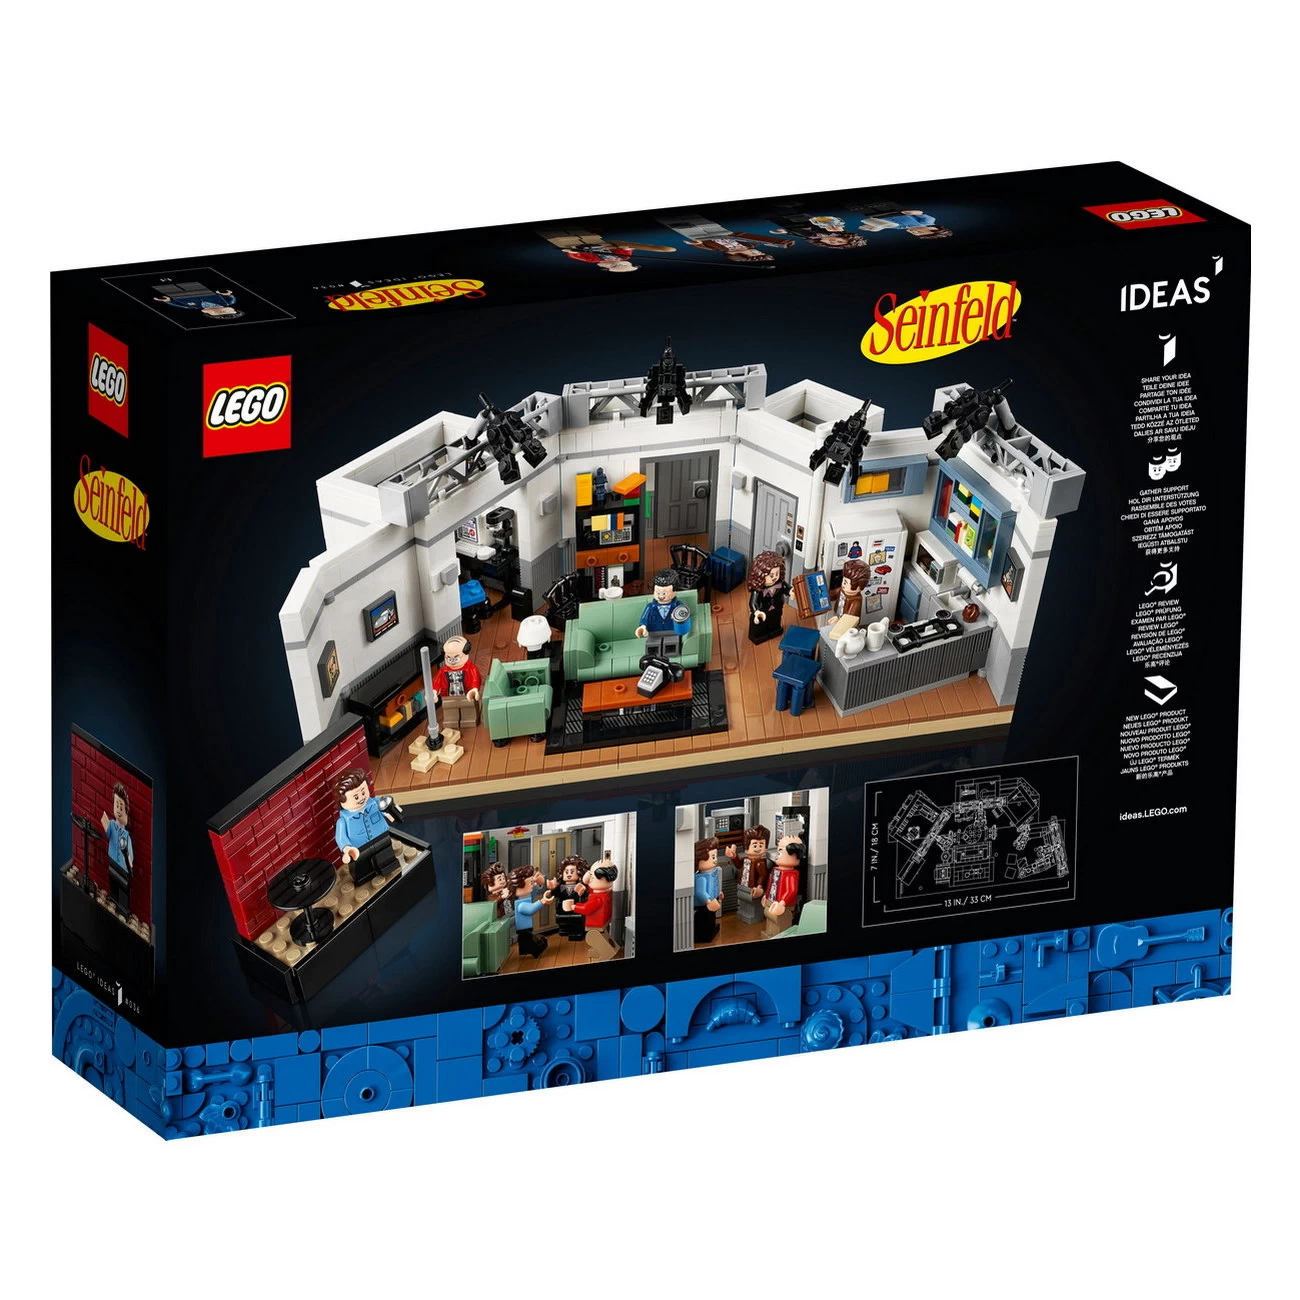 LEGO Ideas 21328 - Seinfeld